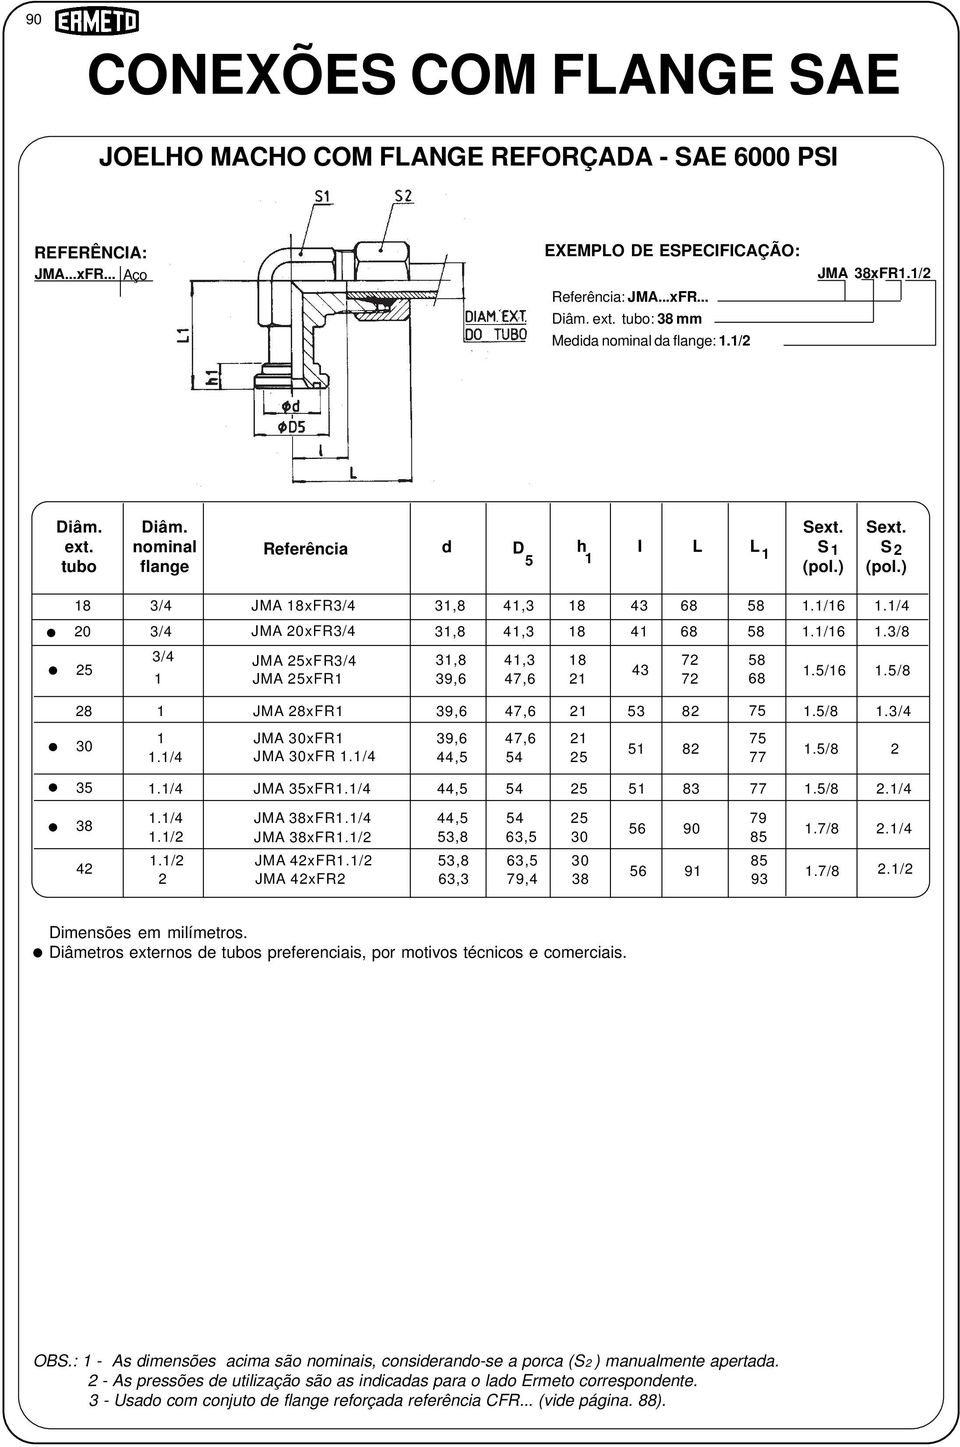 / JMA 3xFR./,./ JMA 3xFR./ 3, 3,./ JMA xfr./ 3, 3, JMA xfr 3,3 79, 3 90 79../ 9 93../ Diâmetros externos de s preferenciais, por motivos técnicos e comerciais. OBS.